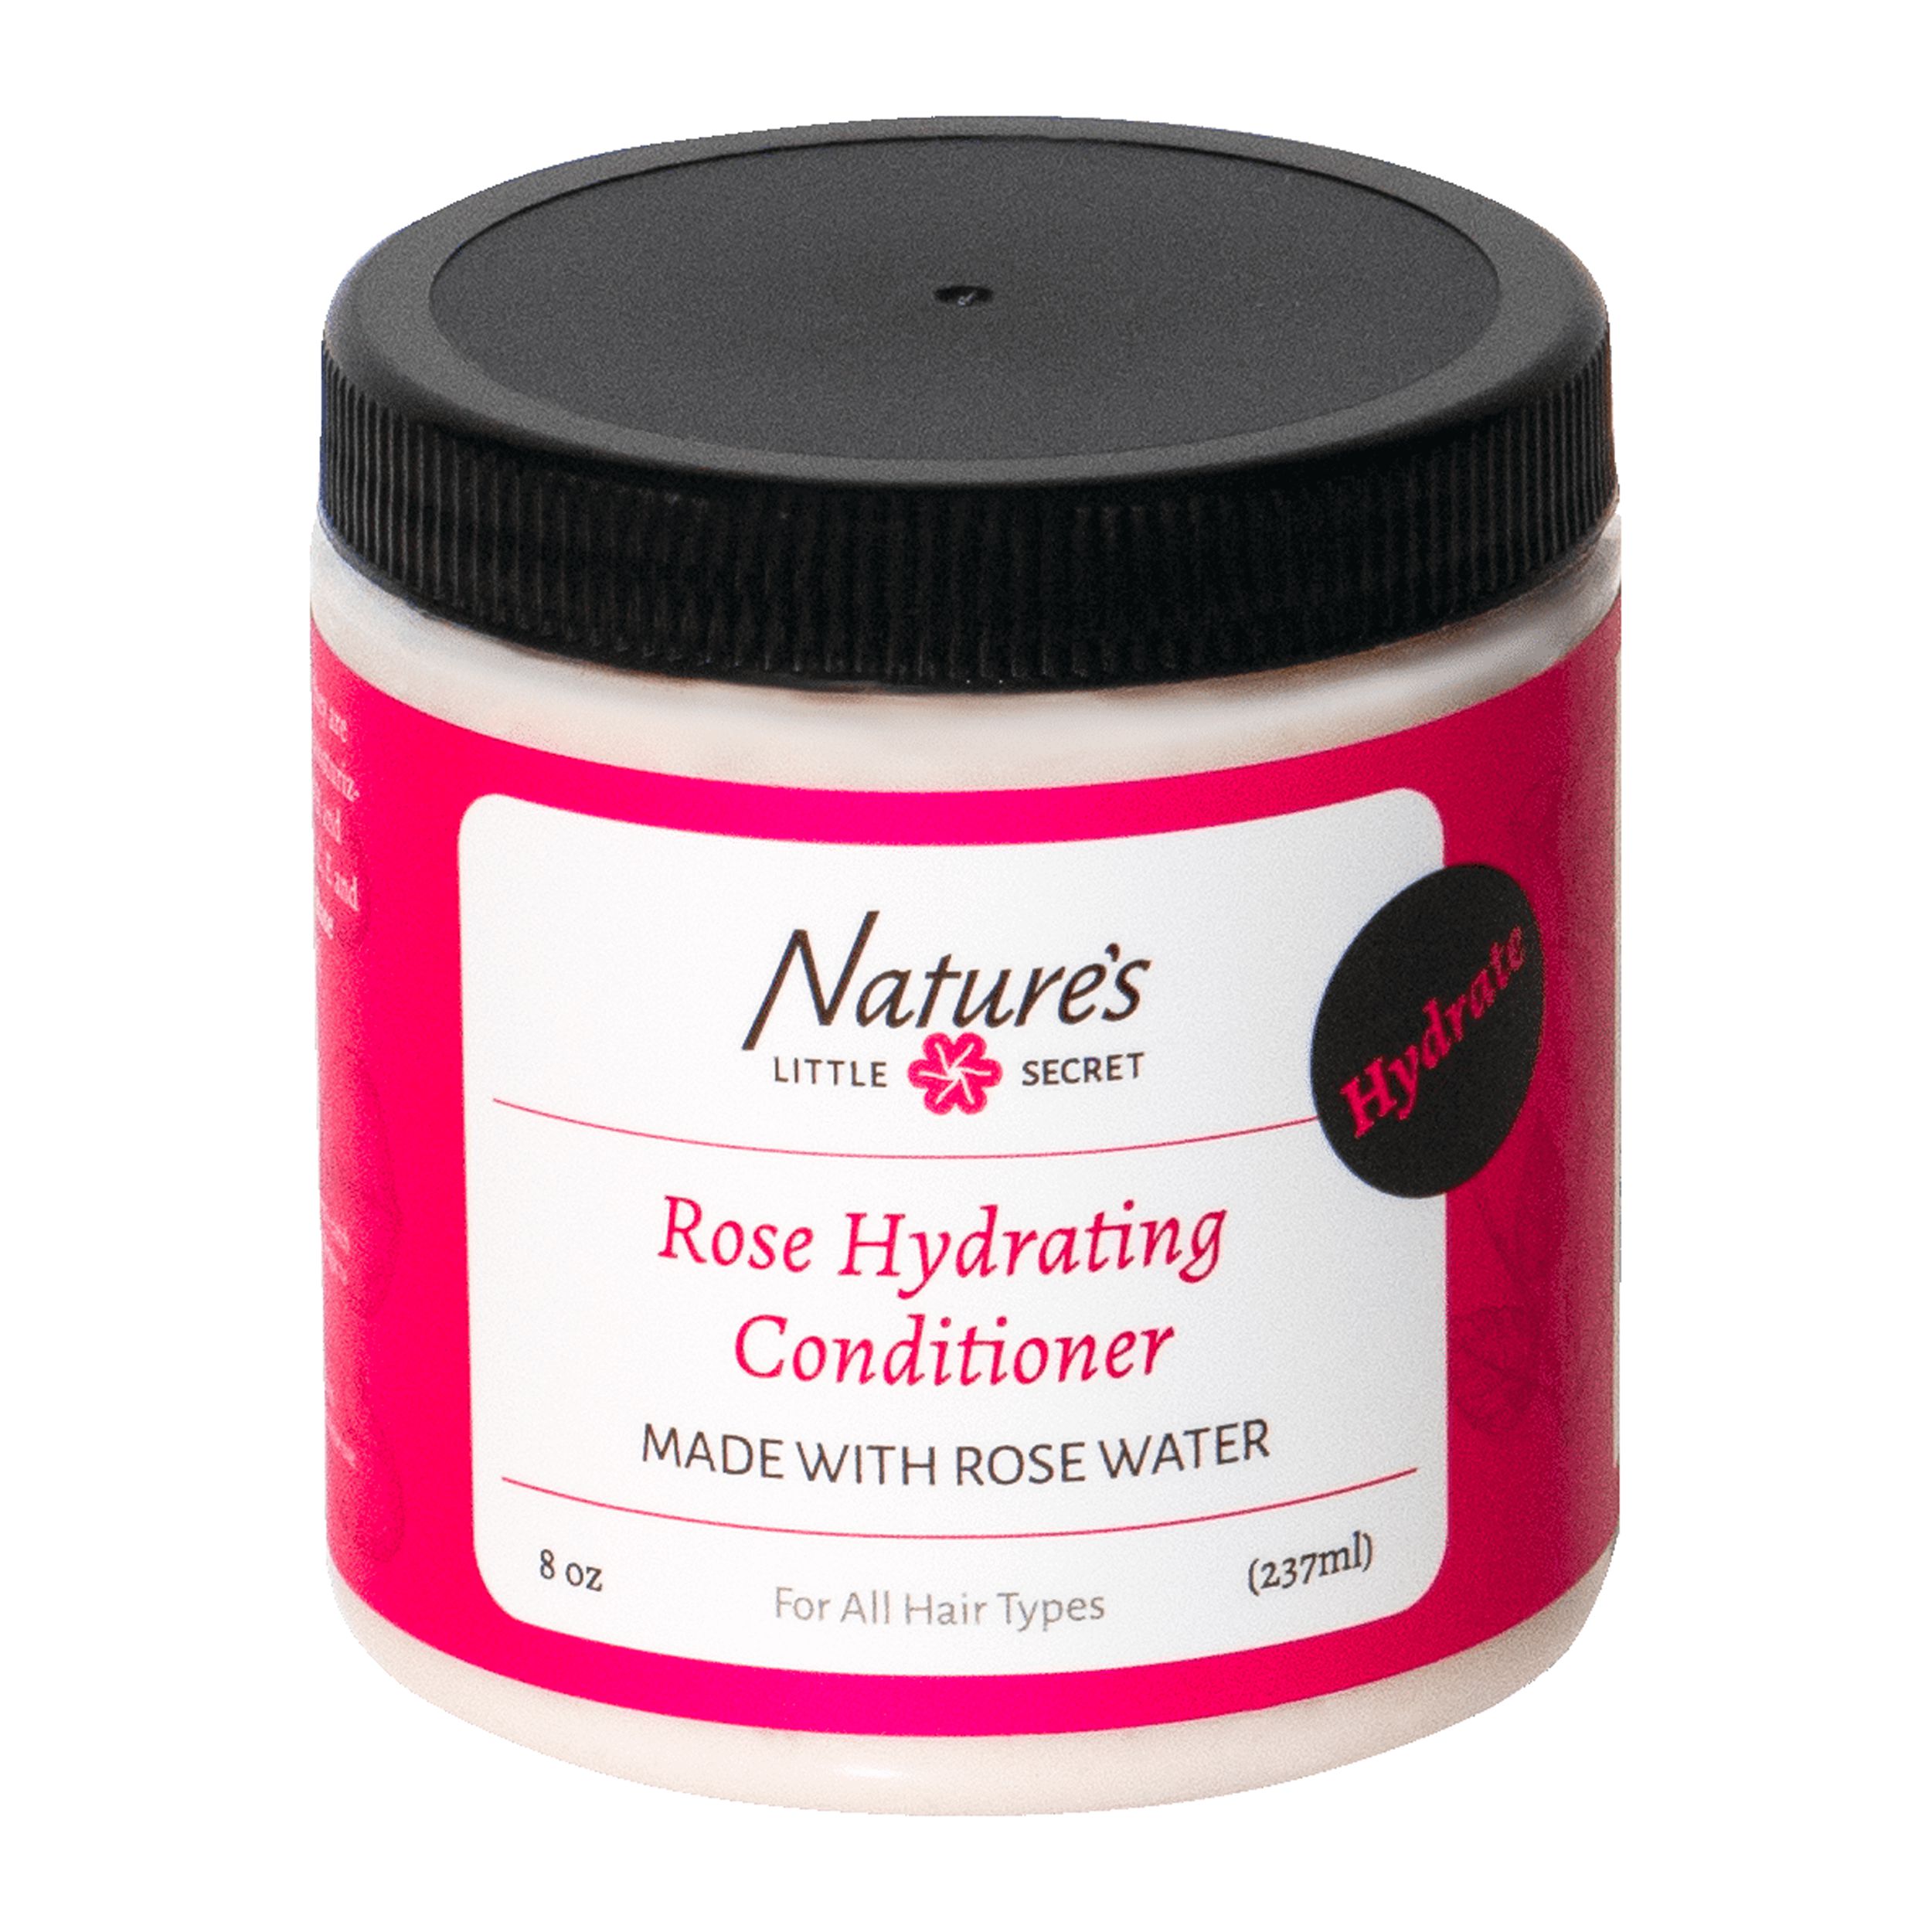 Nature's Little Secret Rose Hydrating Conditioner, 8 oz - image 1 of 2